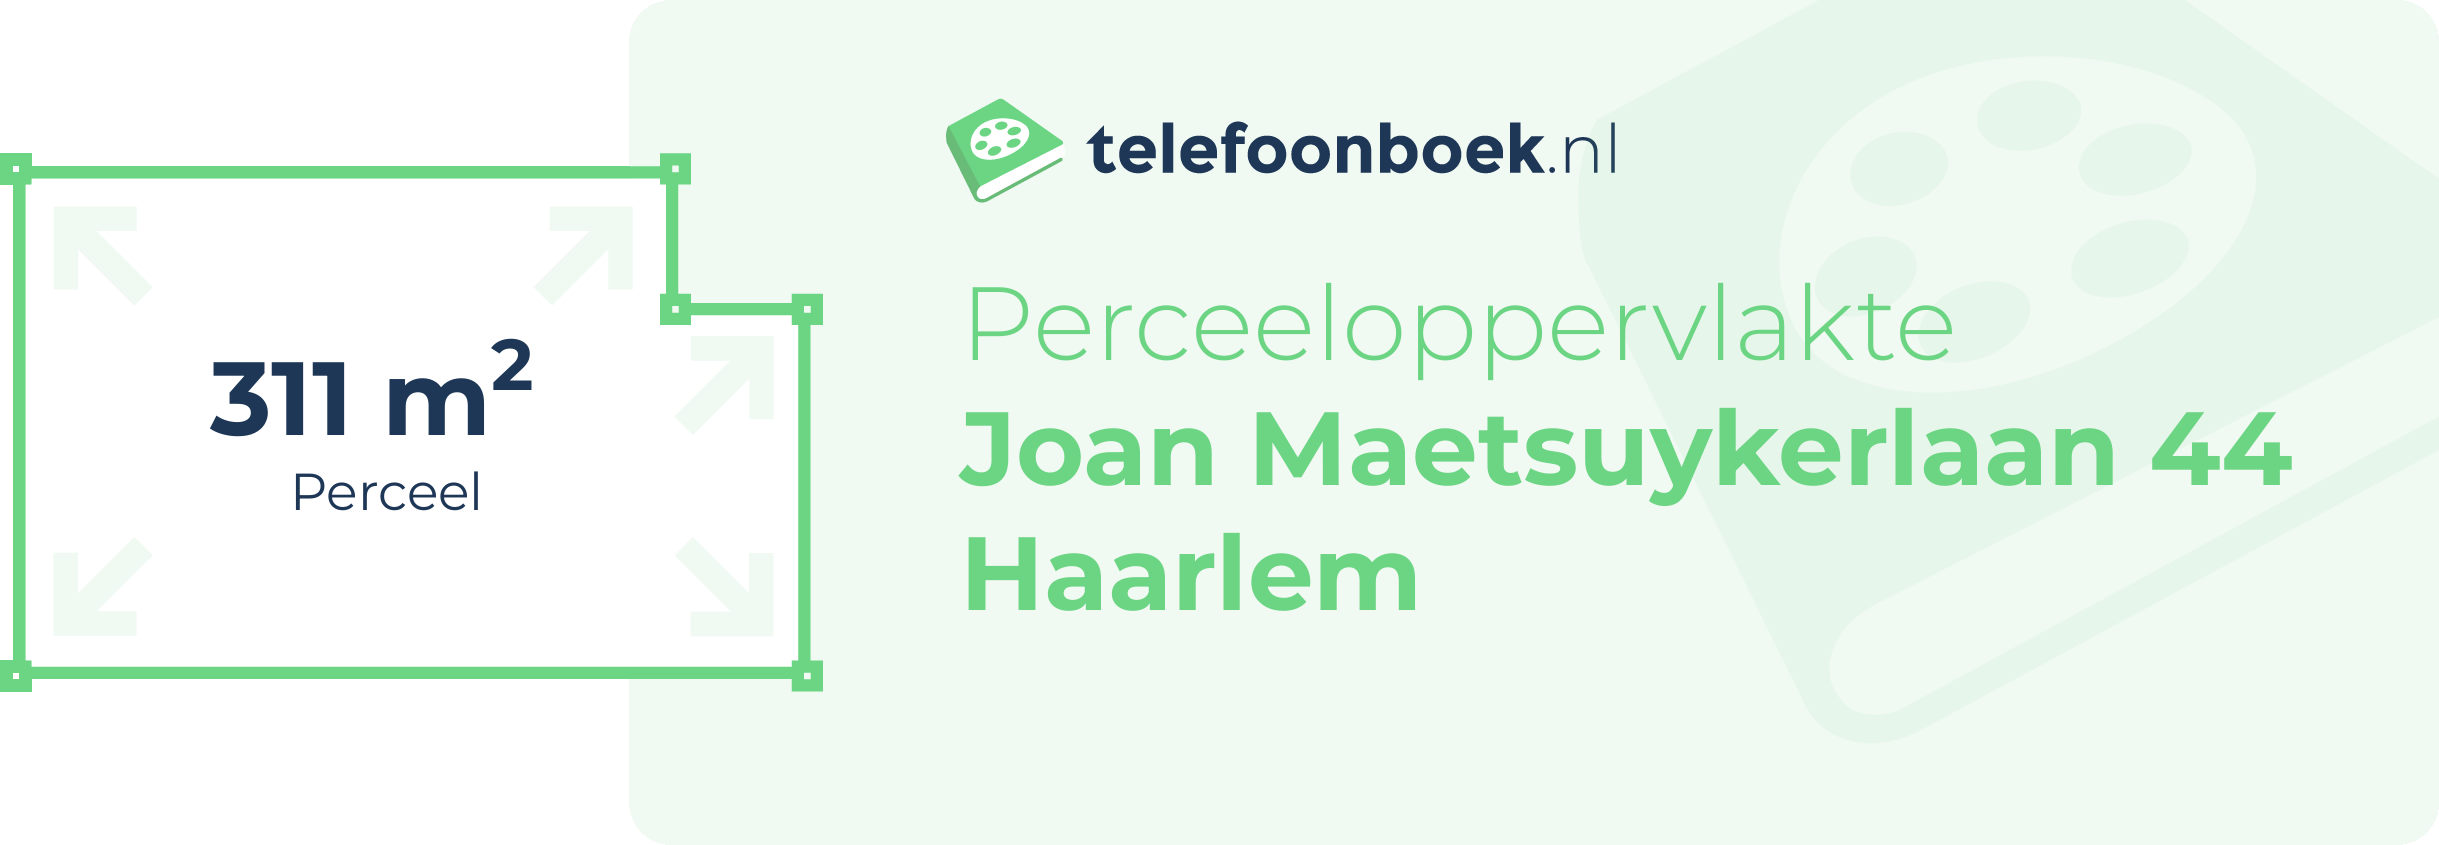 Perceeloppervlakte Joan Maetsuykerlaan 44 Haarlem